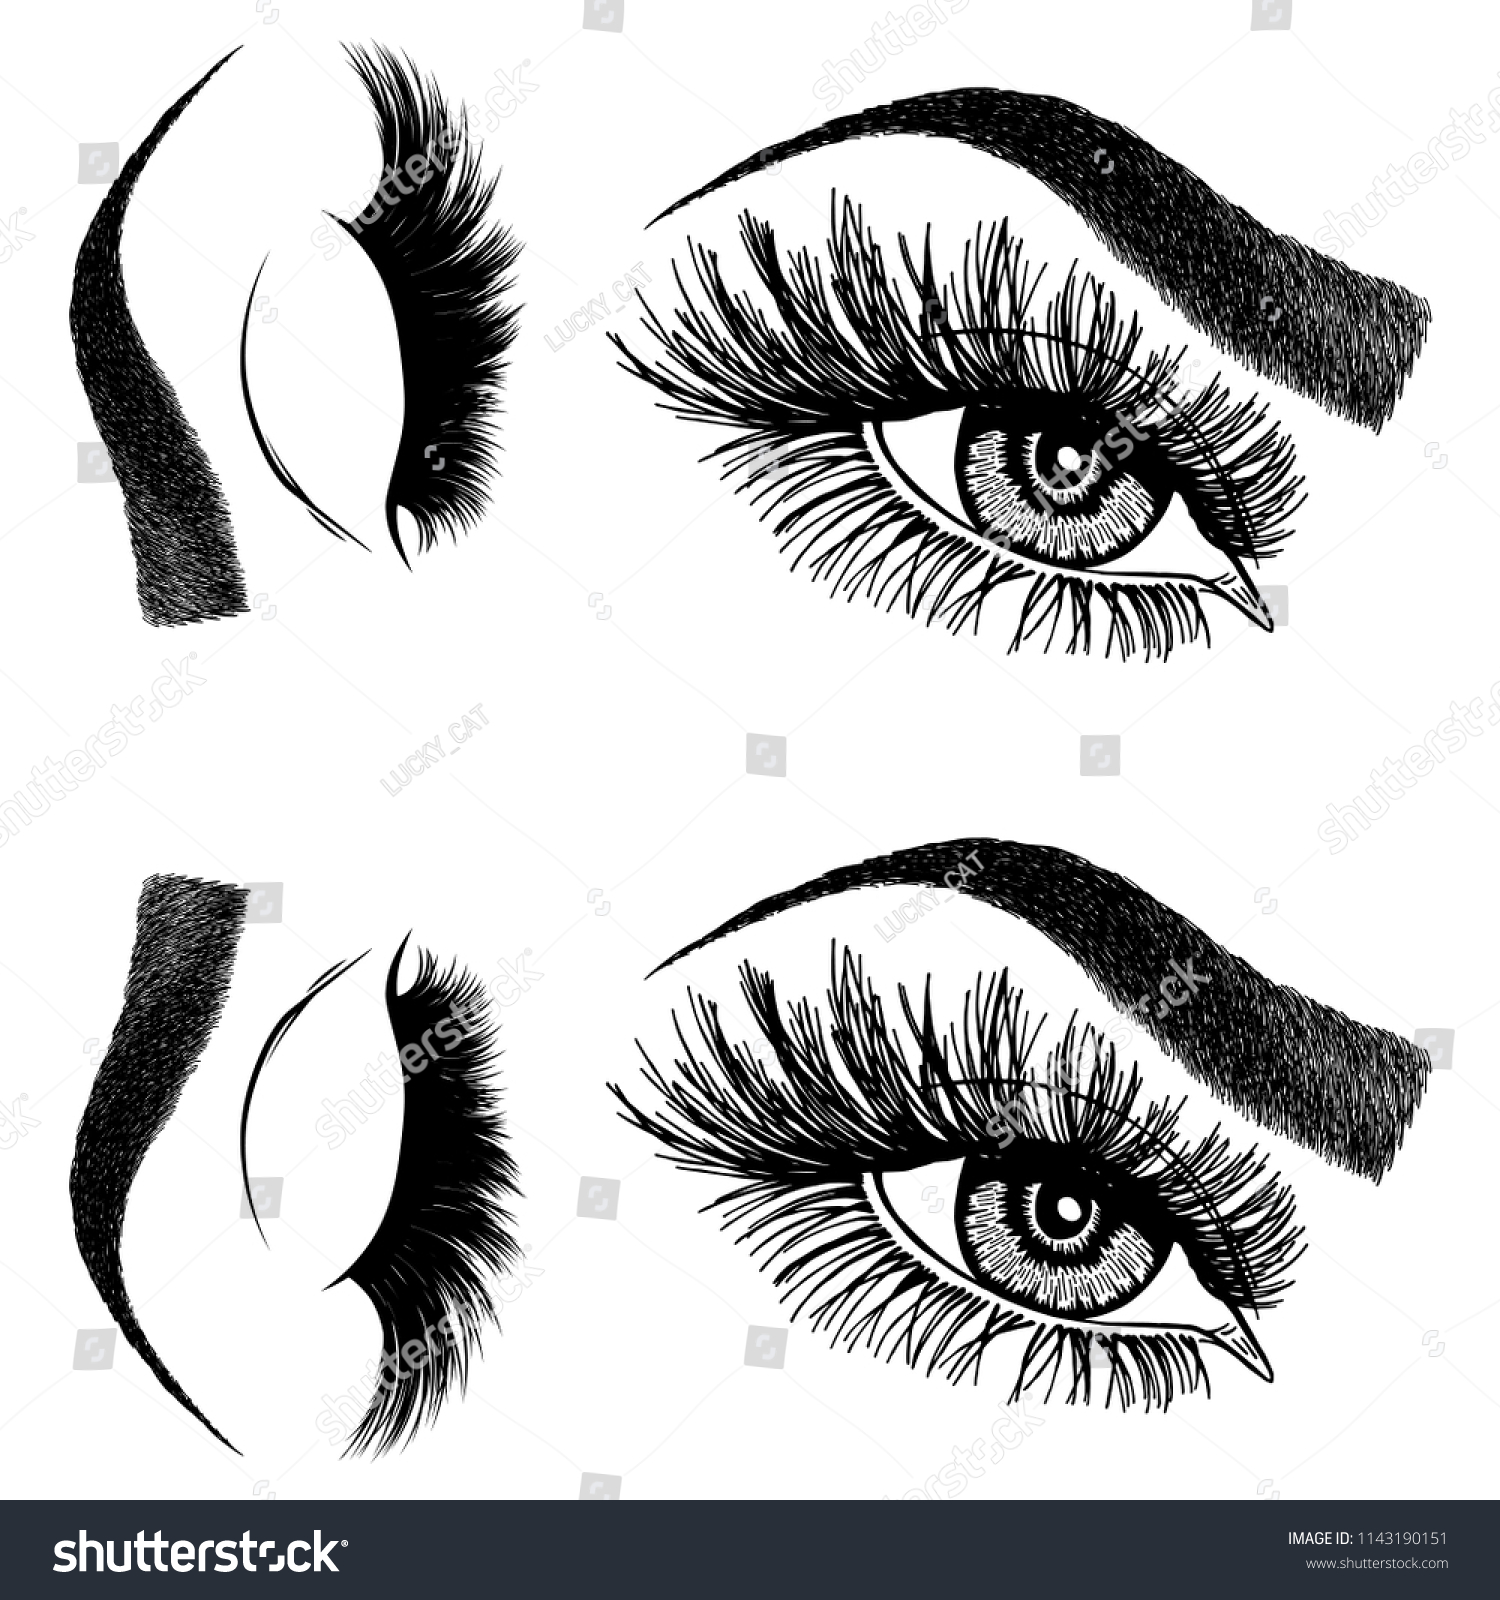 Illustration Womans Eyes Eyelashes Eyebrows Makeup Stock Vector Royalty Free 1143190151 0263